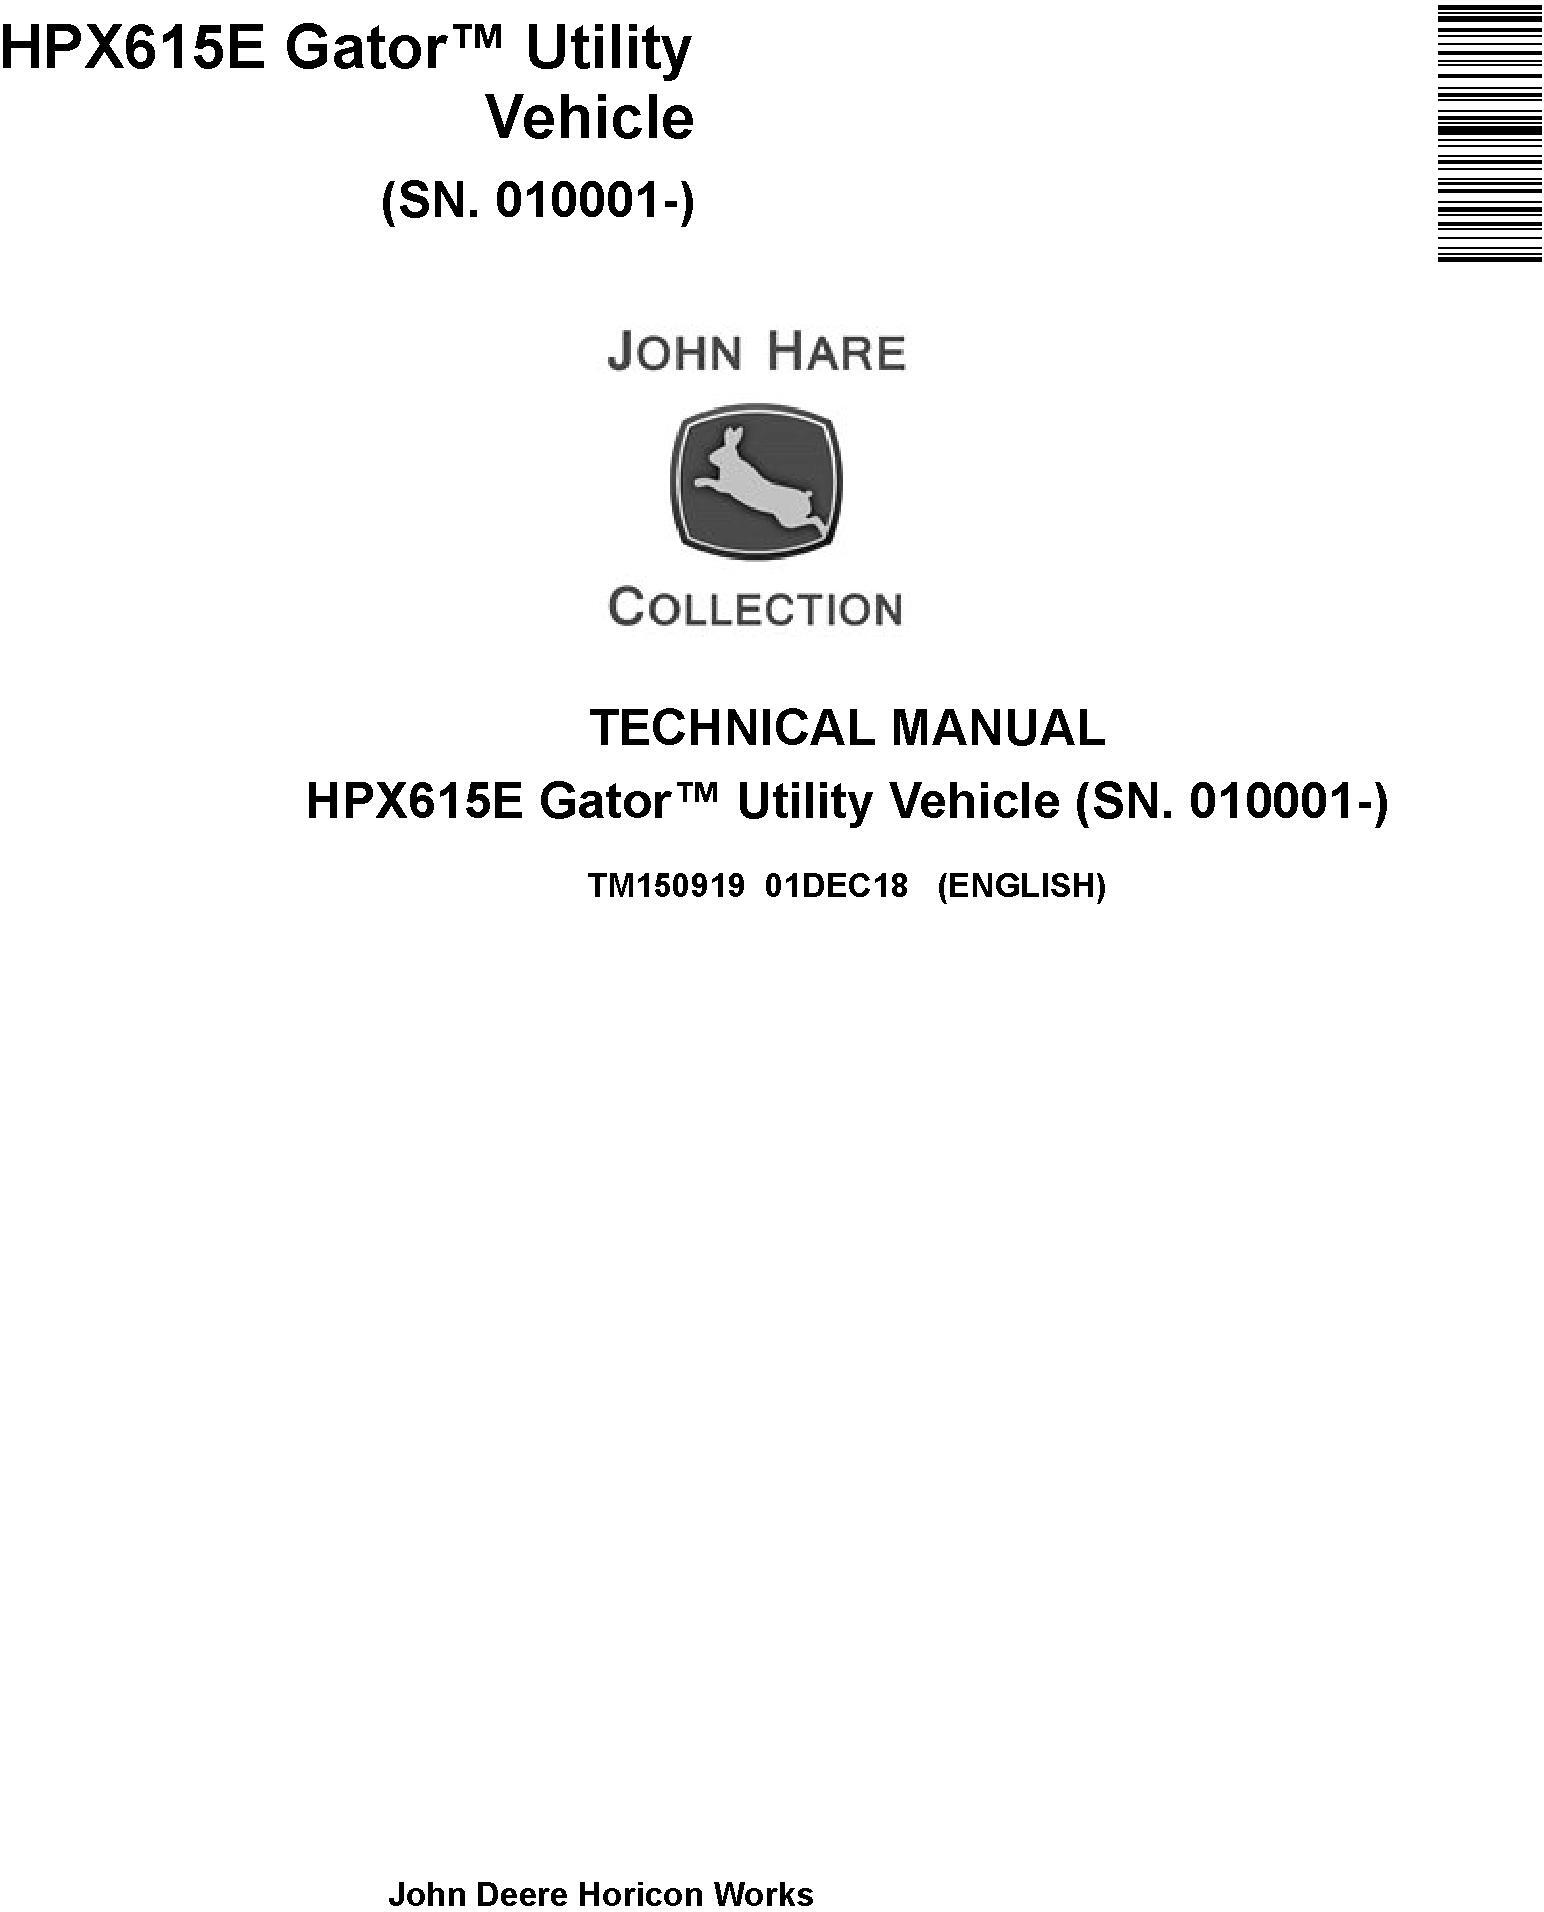 John Deere HPX615E Gator Utility Vehicle Technical Manual TM150919